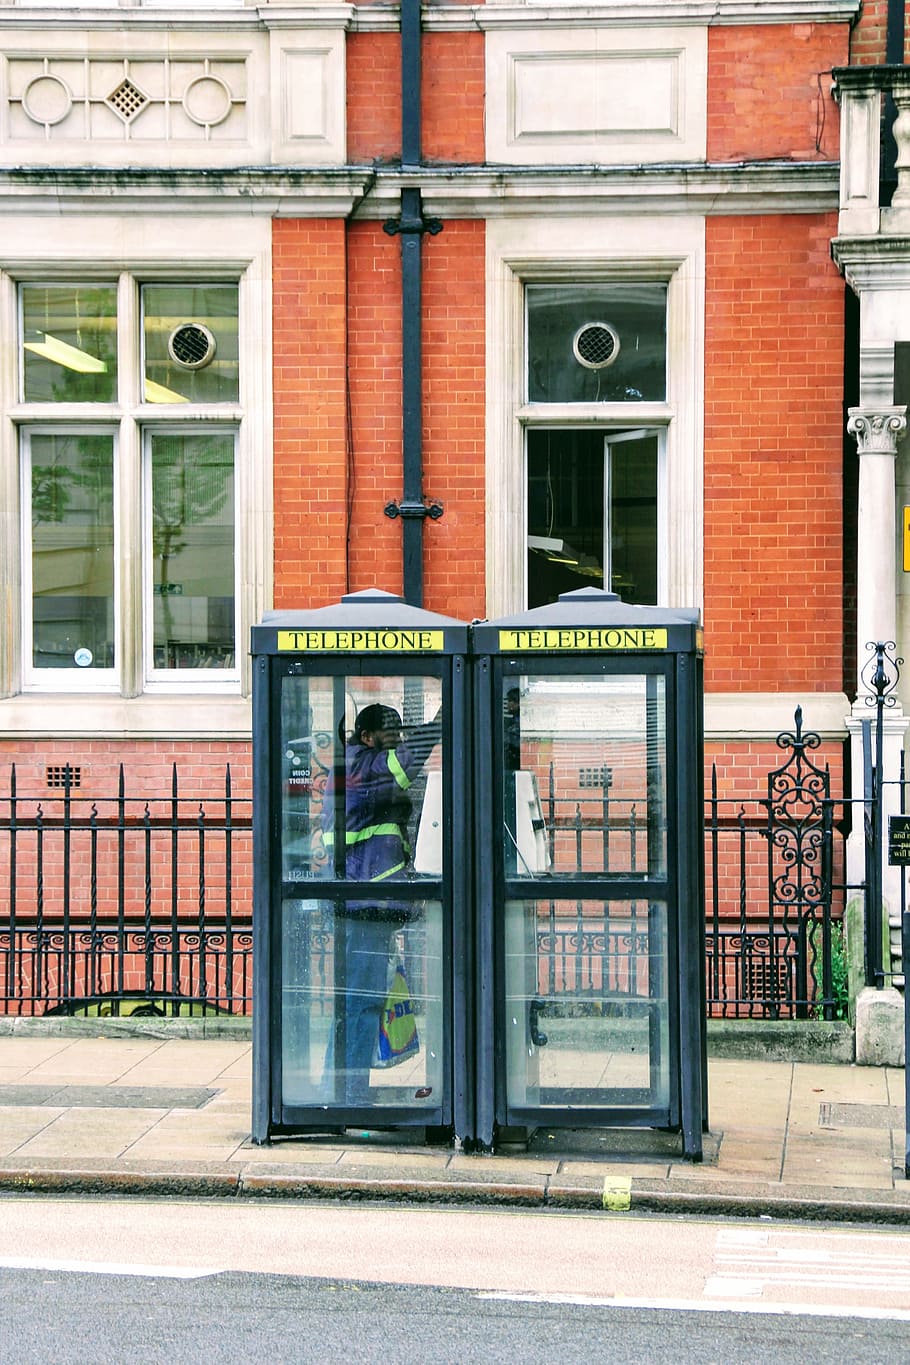 Phone Booth, Telephone House, Dispensary, payphone, london